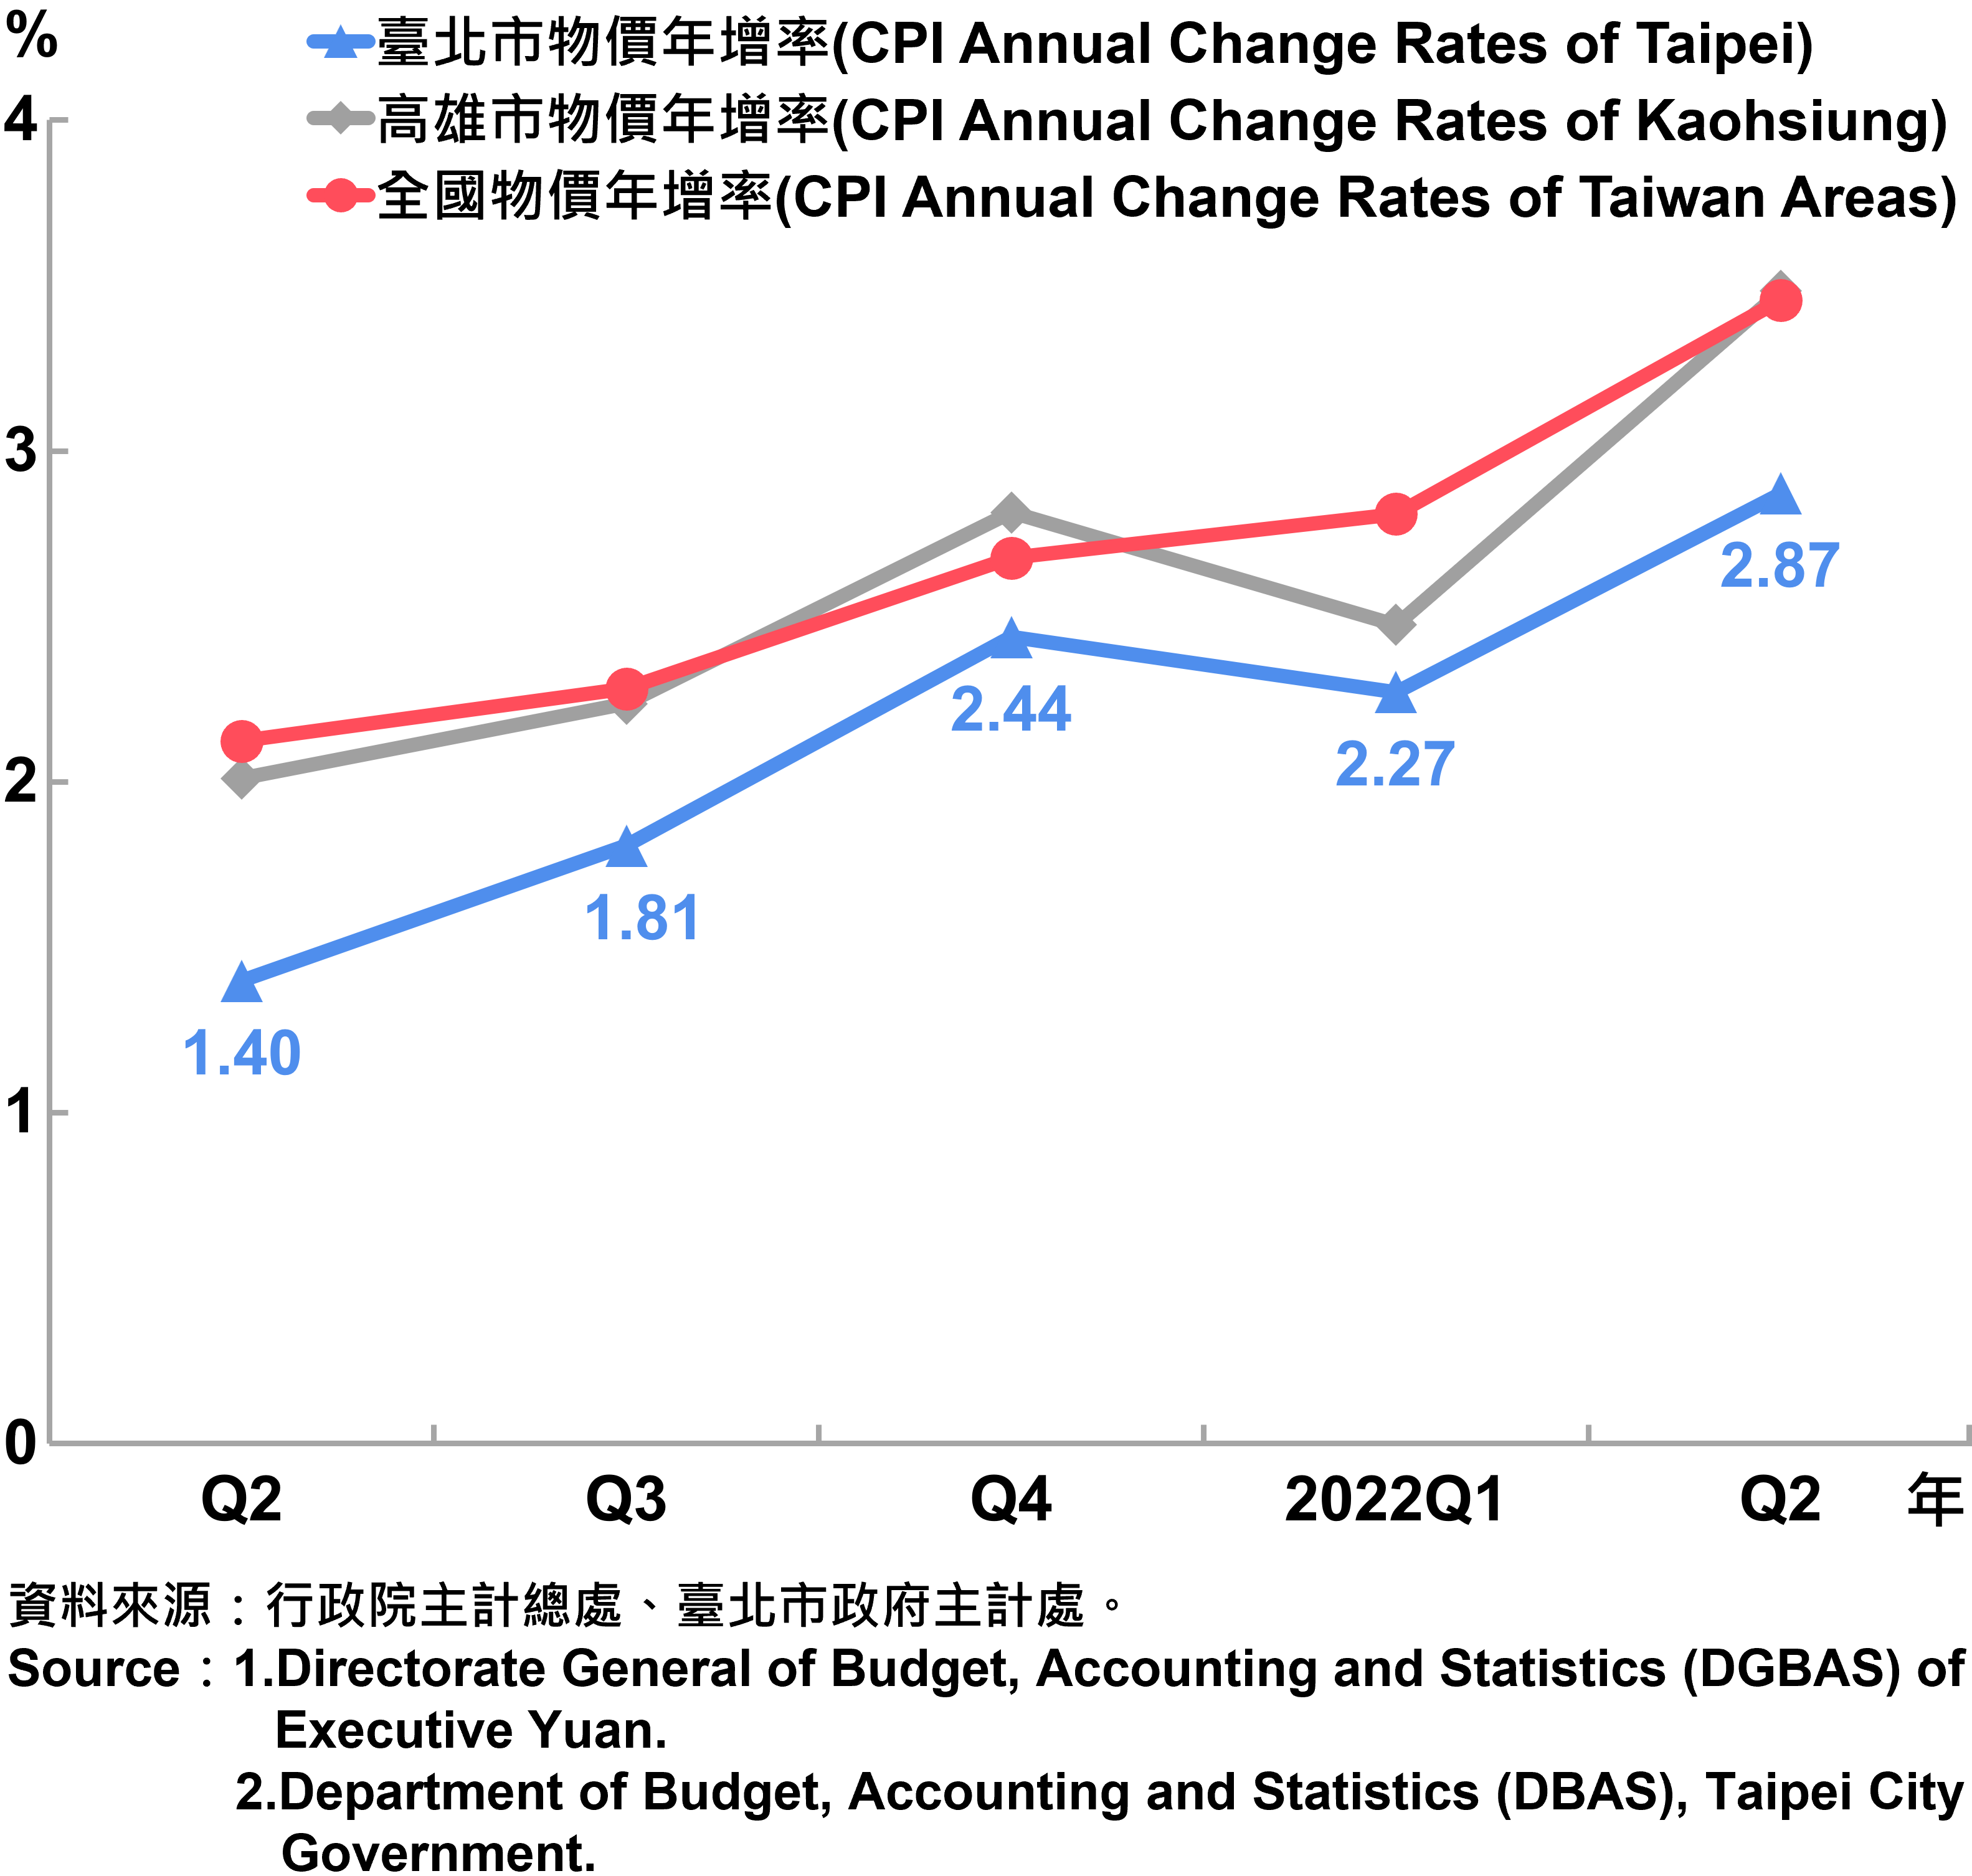 臺北市消費者物價指數（CPI）年增率—2022Q2 Annual Growth Rate of CPI in Taipei City—2022Q2